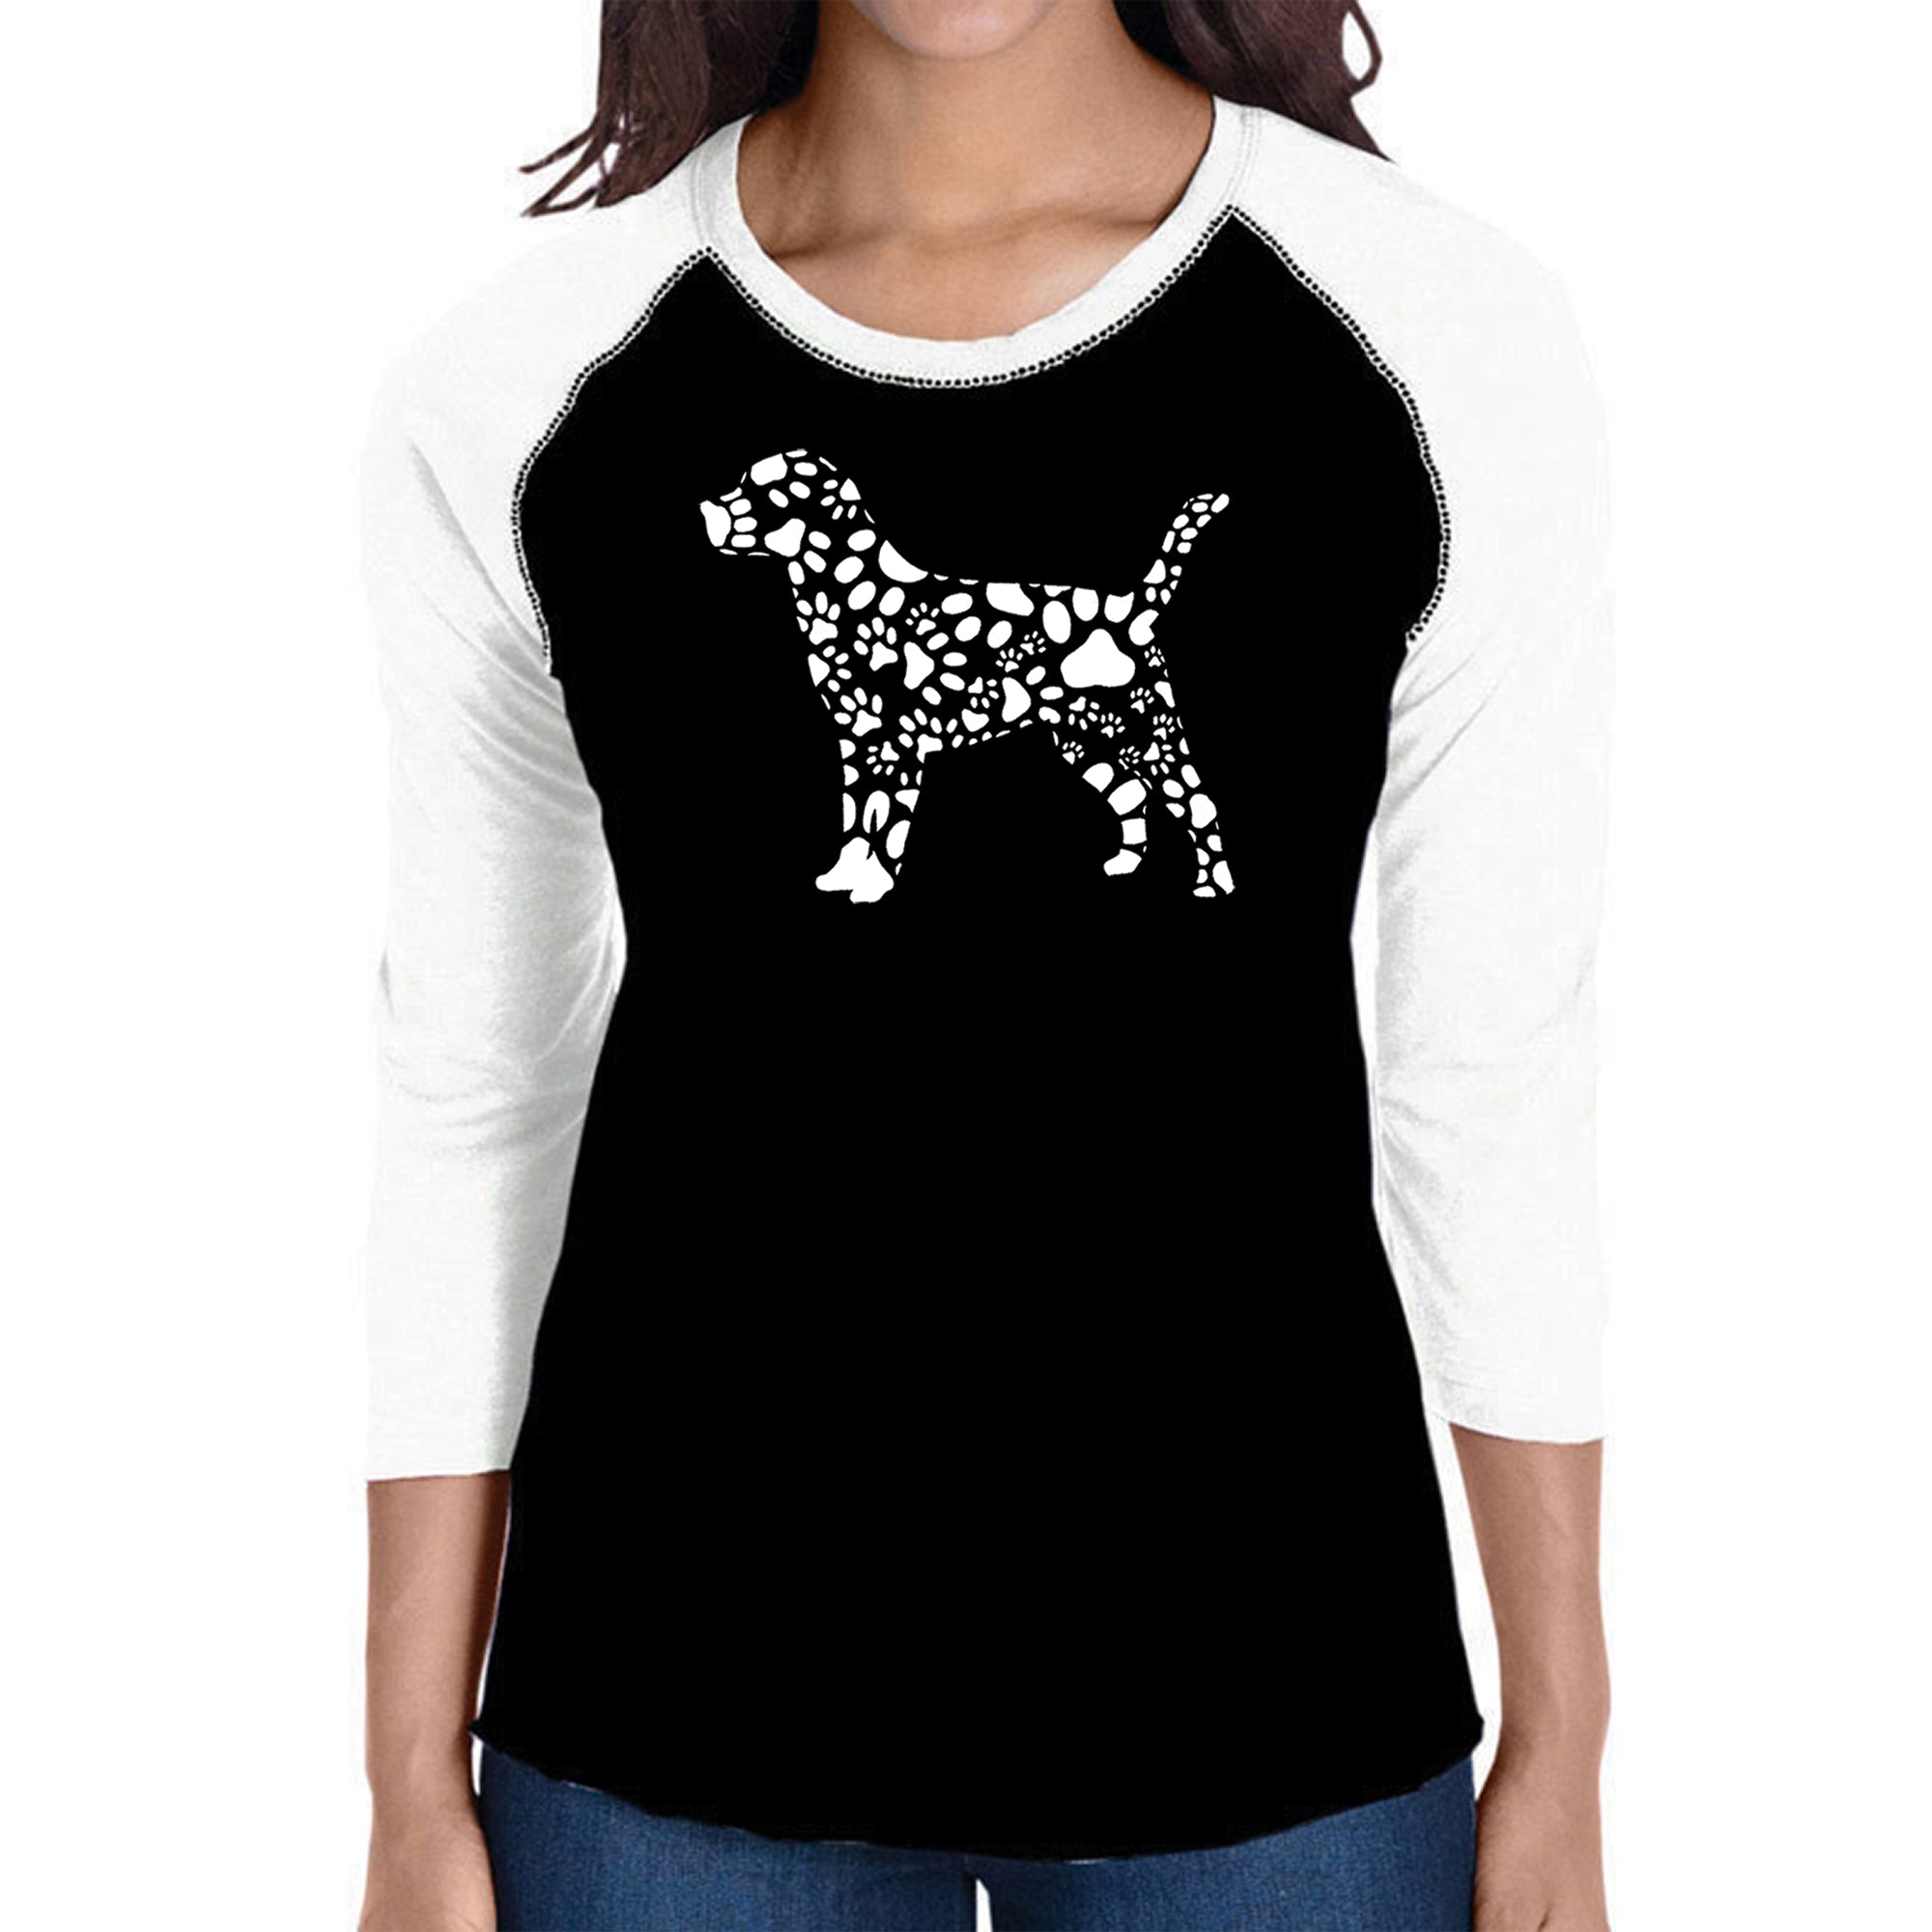 Dog Paw Prints - Women's Raglan Word Art T-Shirt - Black/White - X-Large